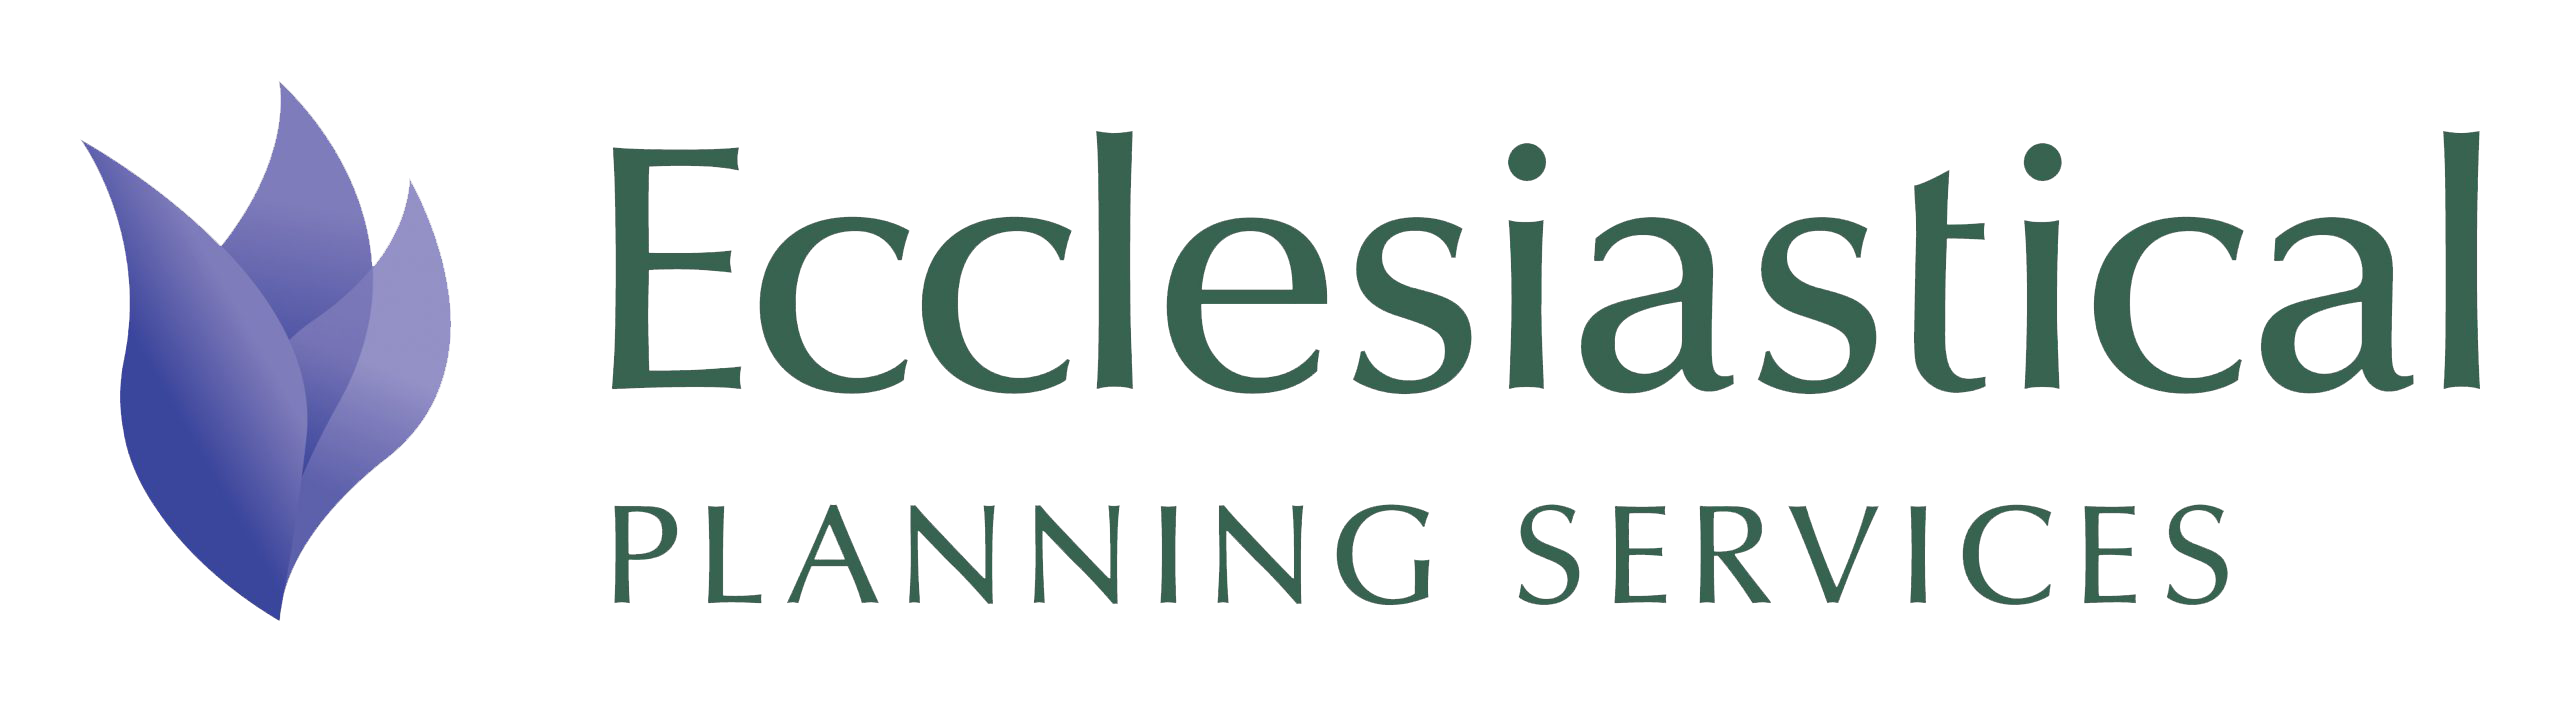 Ecclesiastical Planning Services